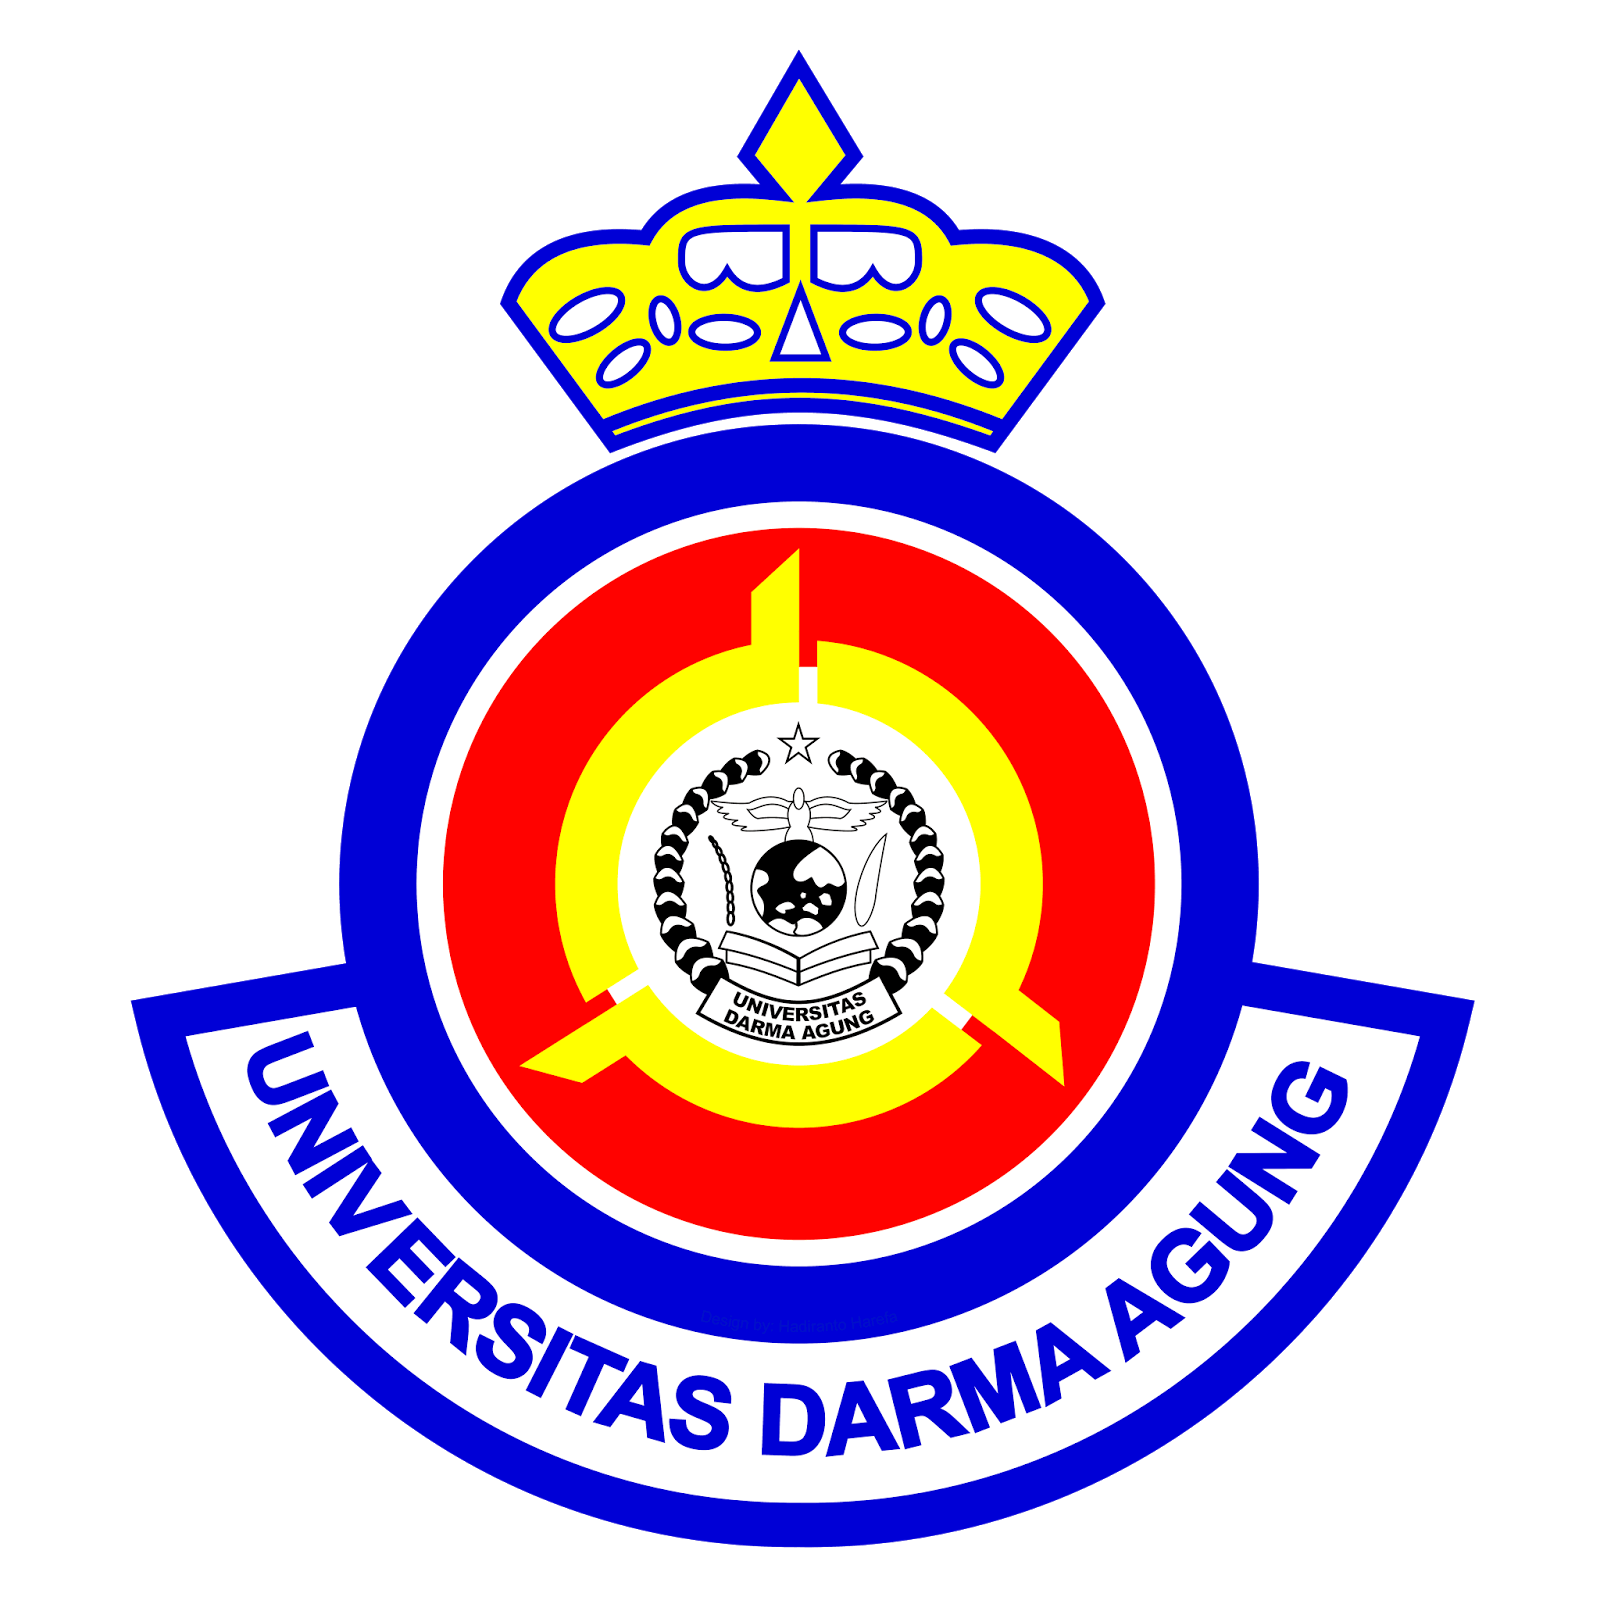 Darma Logo - File:LOGO UDA.png - Wikimedia Commons